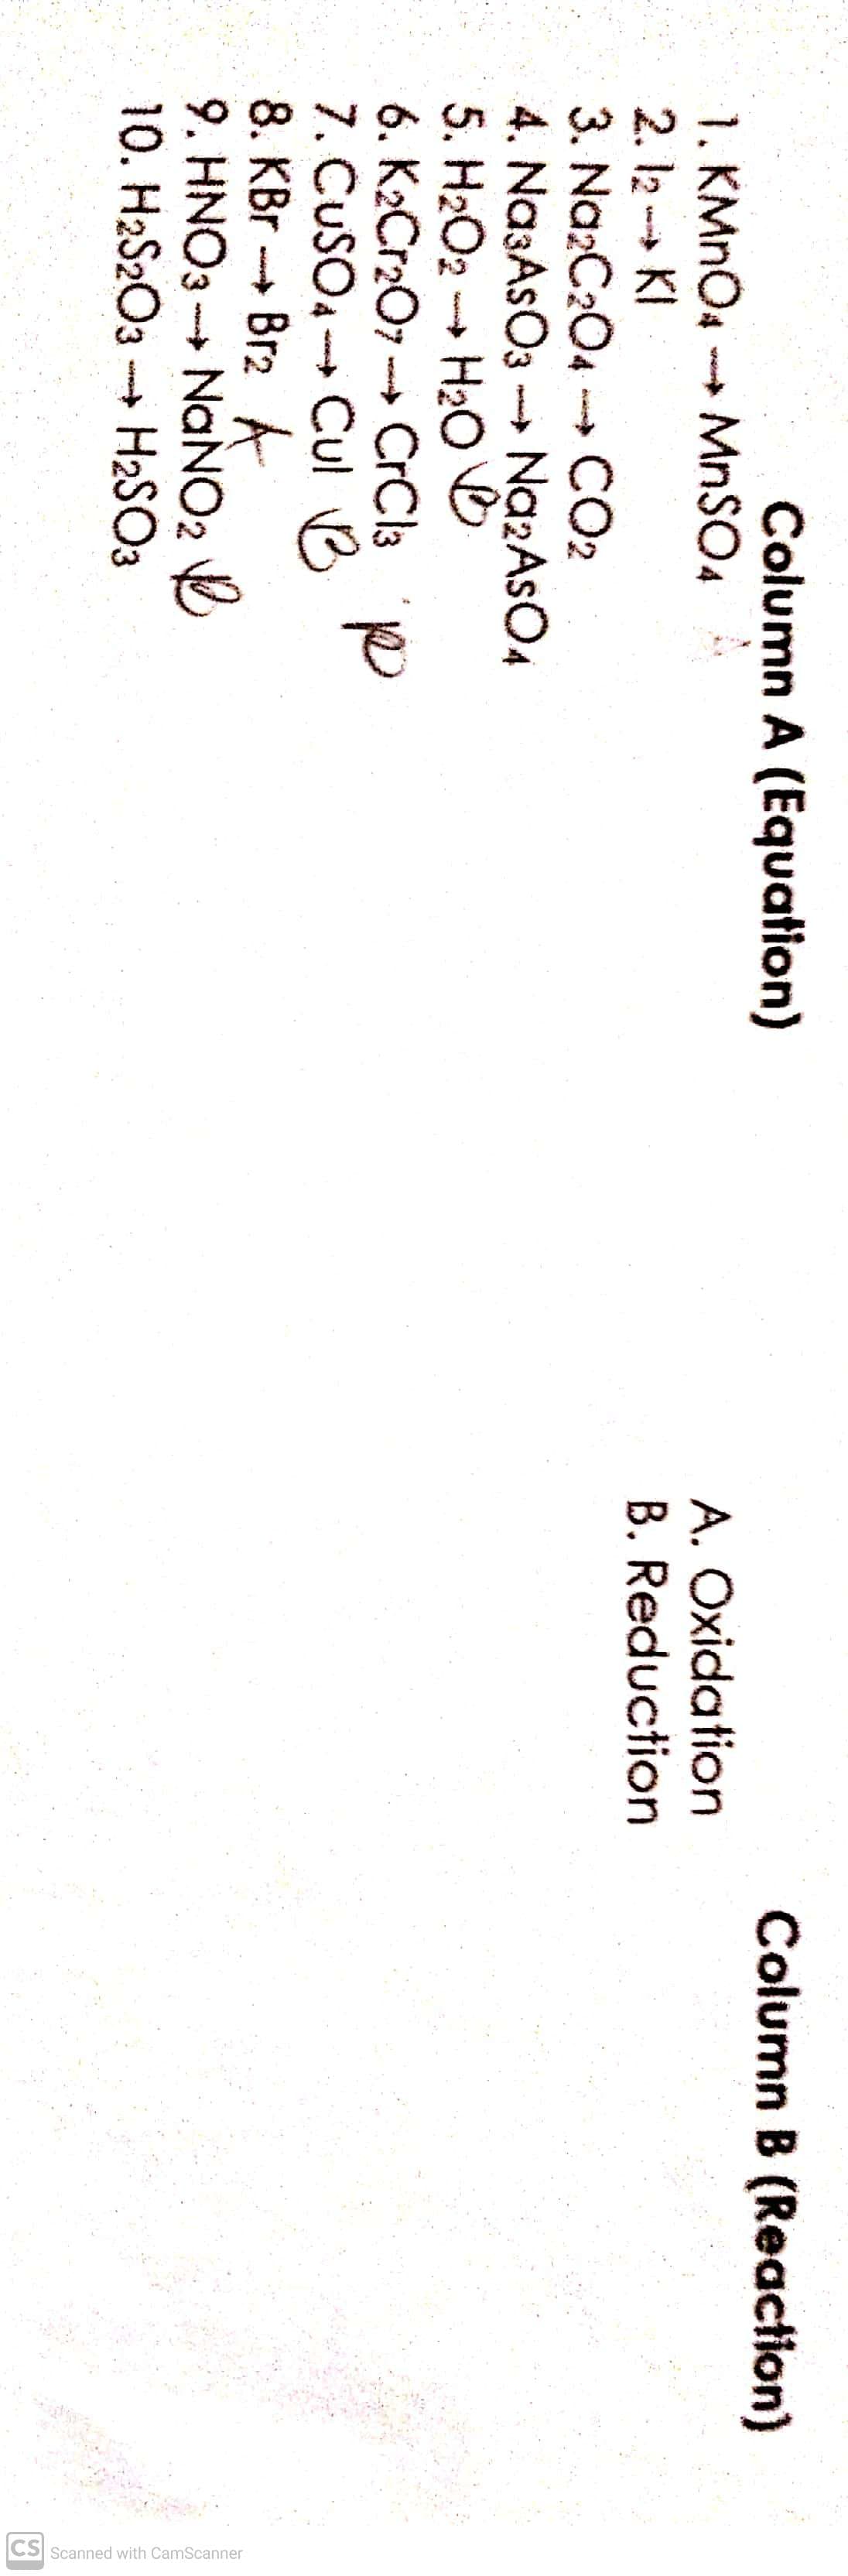 CS Scanned with CamScanner
Column A (Equation)
Column B (Reaction)
1. KMNO4 MnSO4
2. 12 - KI
3. Na2C204
A. Oxidation
B. Reduction
m CO2
4. Na3AsO3 -NazAsO4
5. H2O2
H2O O
6. K2Cr2O7 --→ CrCl3 D
7. CUSOA Cul B
8. KBr - Br2 A
9. HNO3 - NANO2
10. H2S2O3 H2SO3
